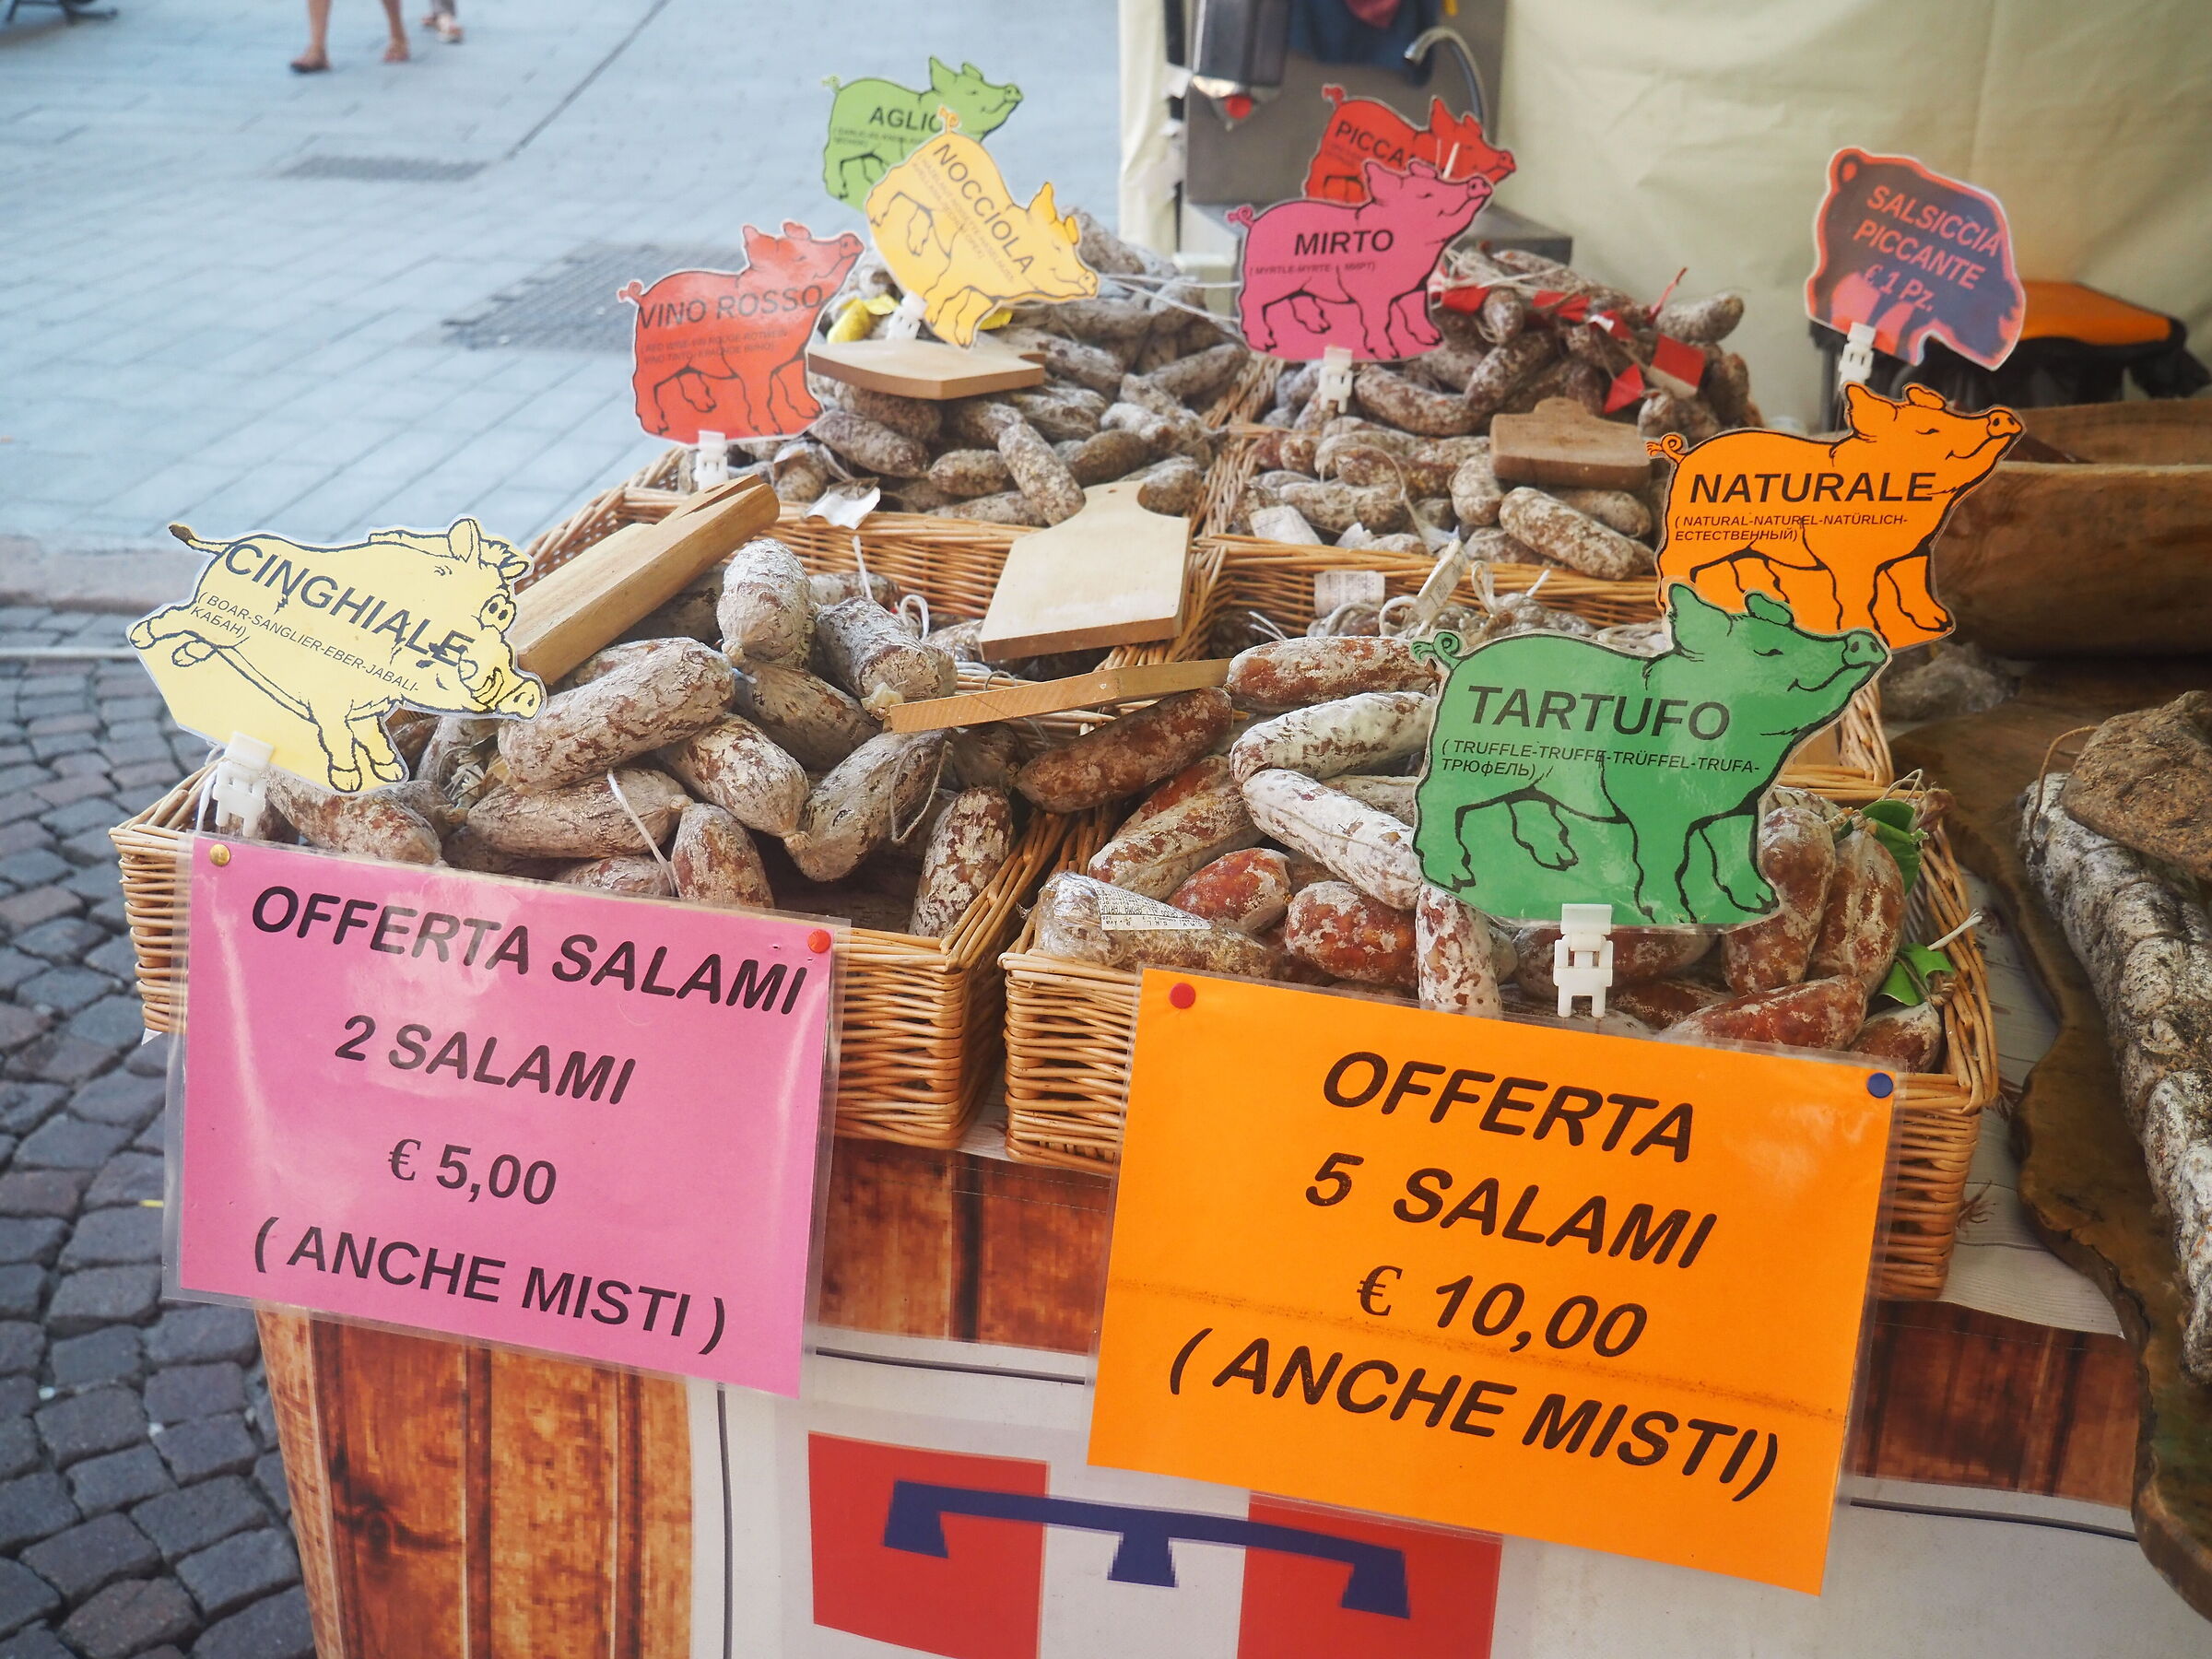 When salami arrives in Modena...